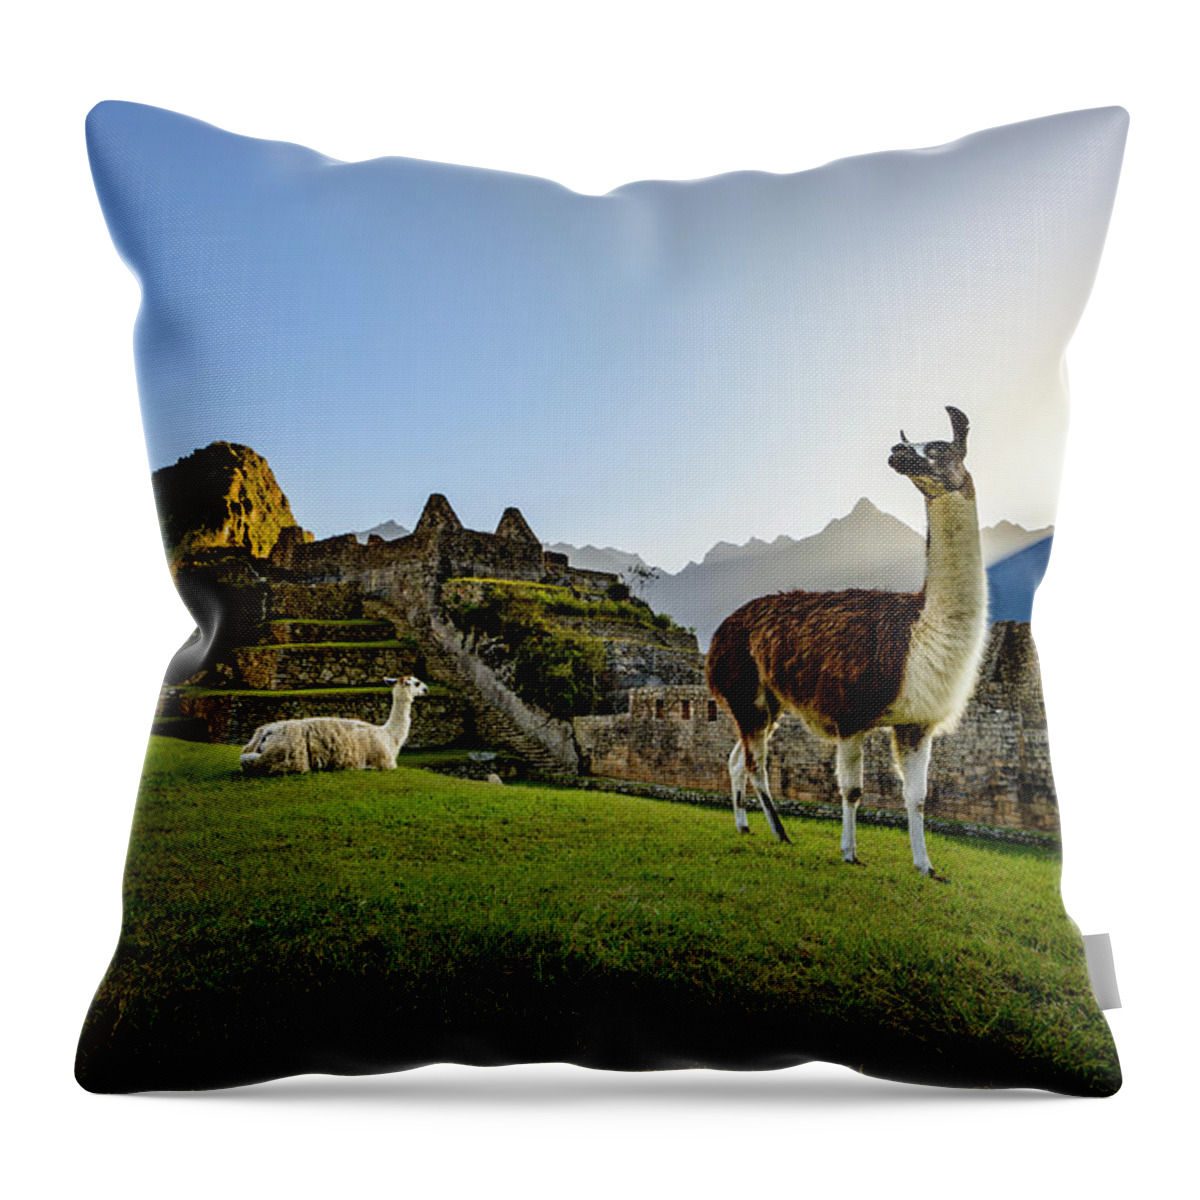 Sunrise Throw Pillow featuring the photograph Llamas at the Ruins by Oscar Gutierrez